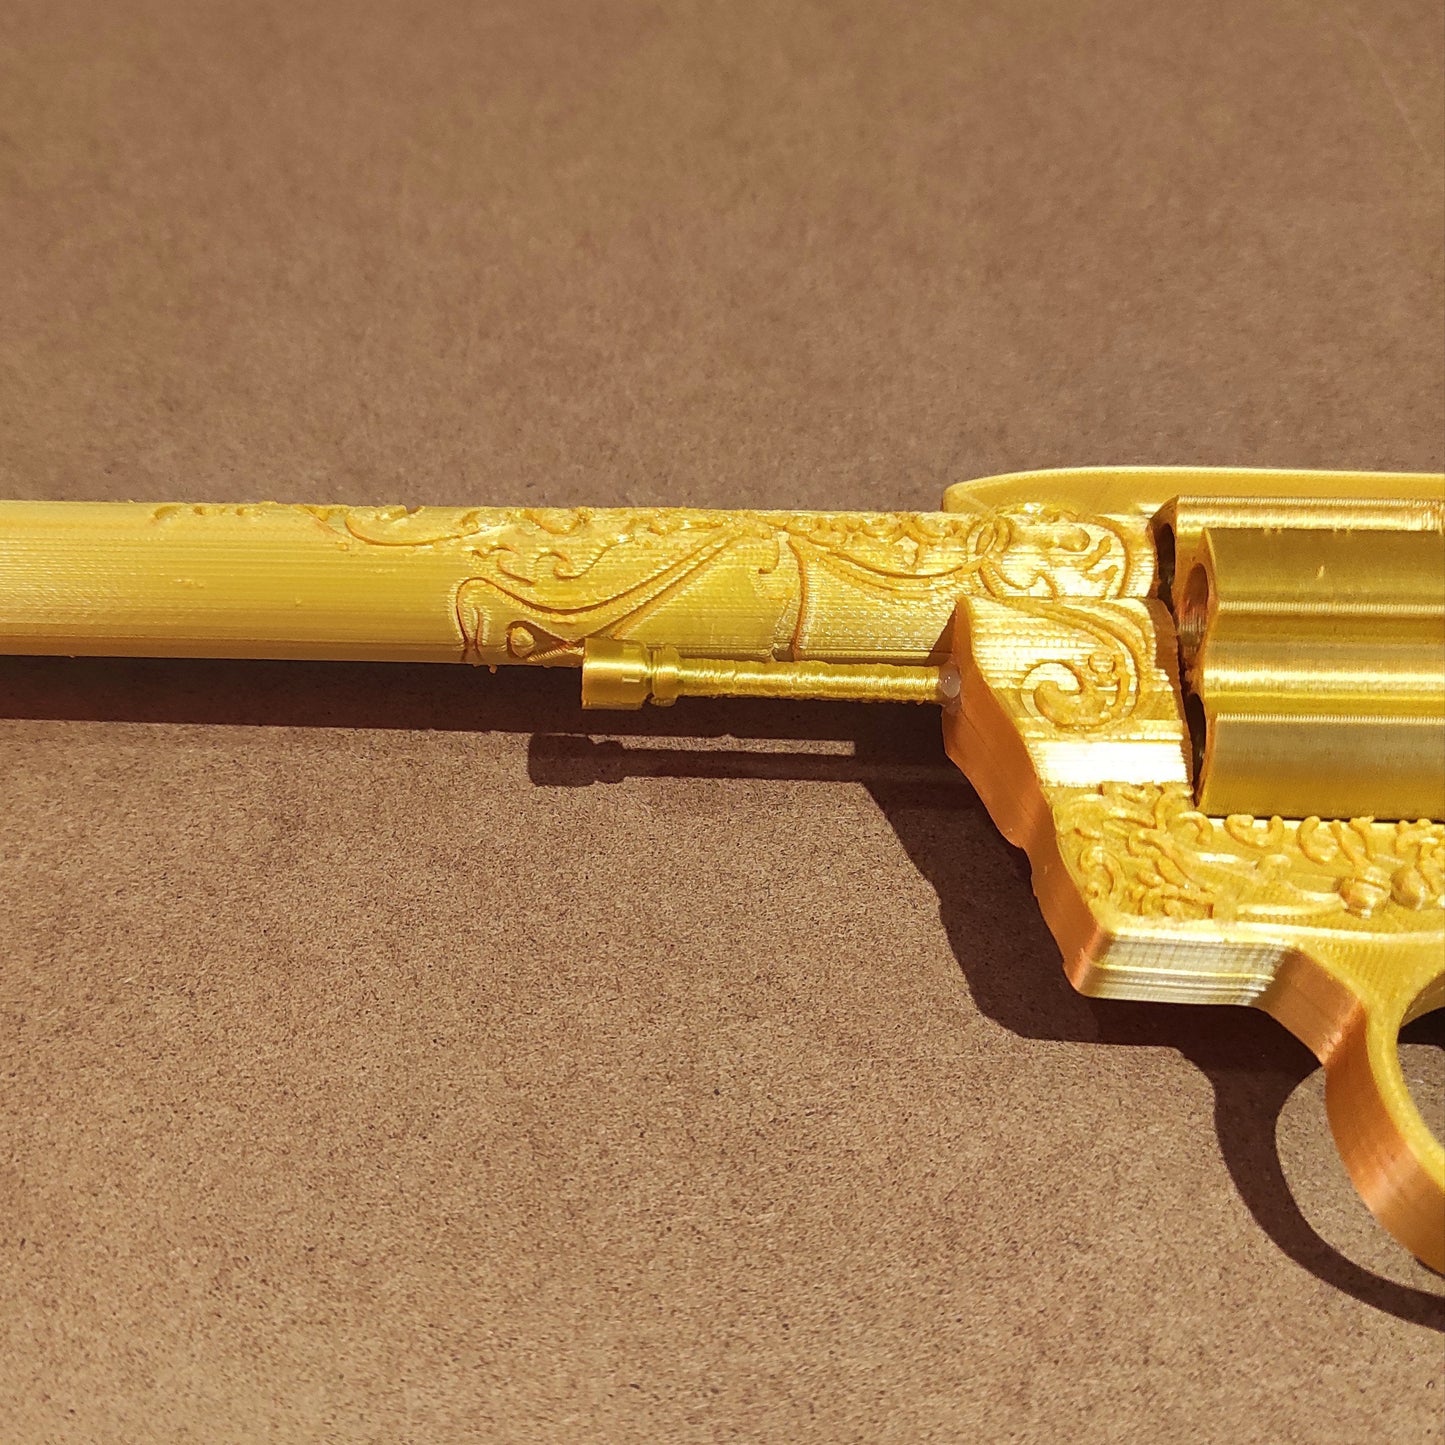 DOUBLE-ACTION Revolver / Golden Colt M1892 Replica / Based On RDR2 & GTA5 / Cowboy Prop Gift Western John Marston Trevor Phillips Cosplay